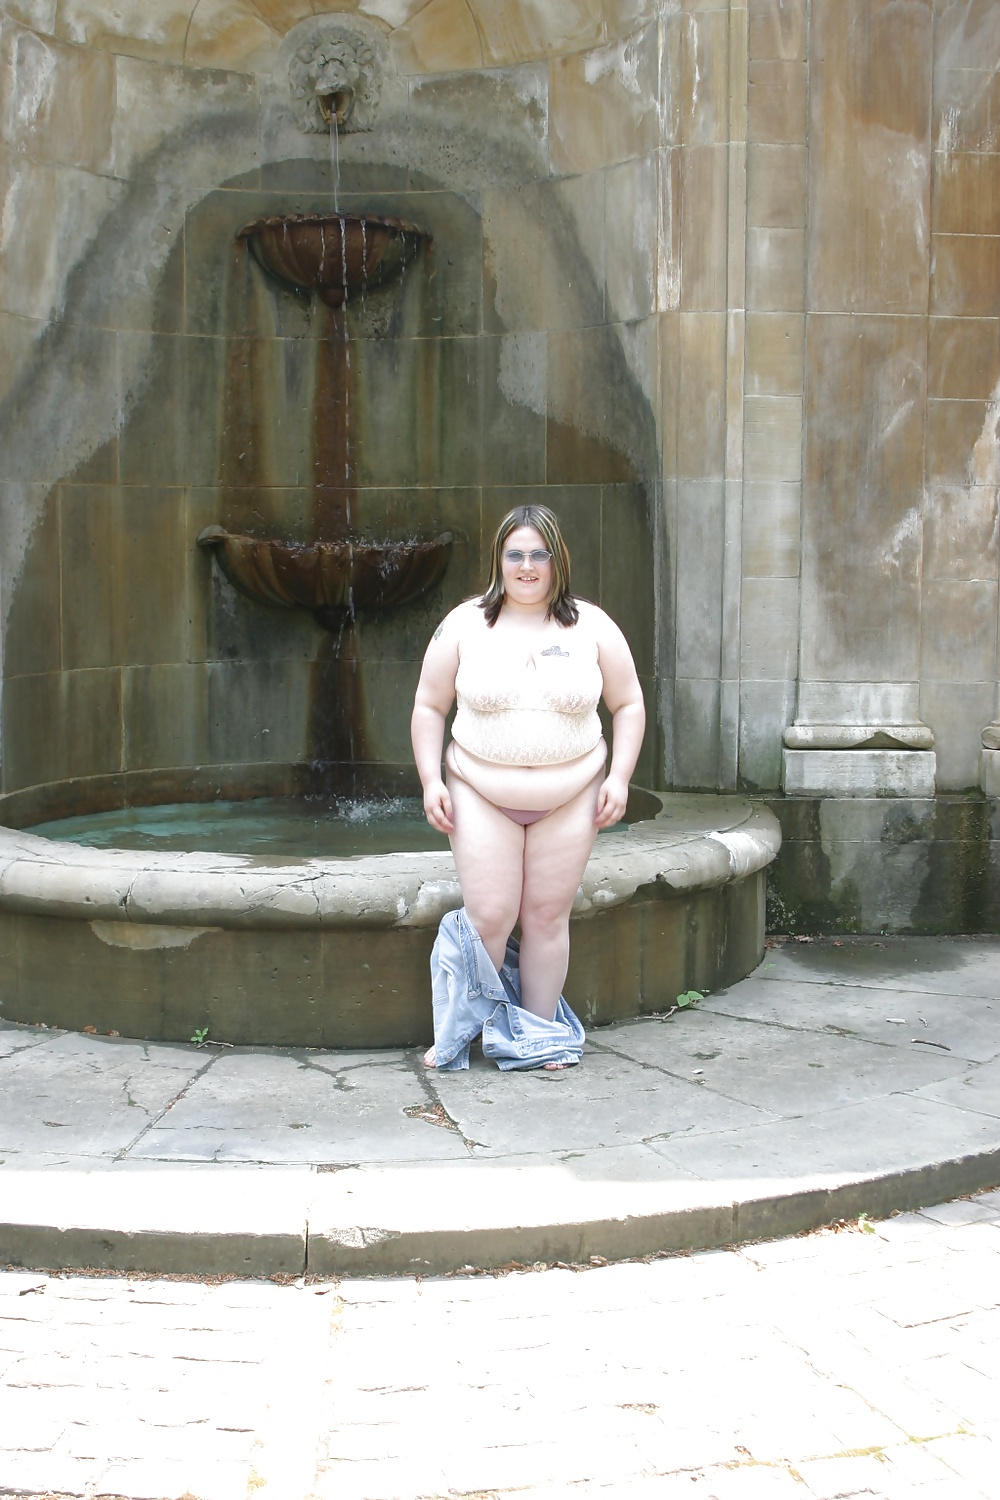 Kaylee nuda alla fontana pubblica
 #39319455